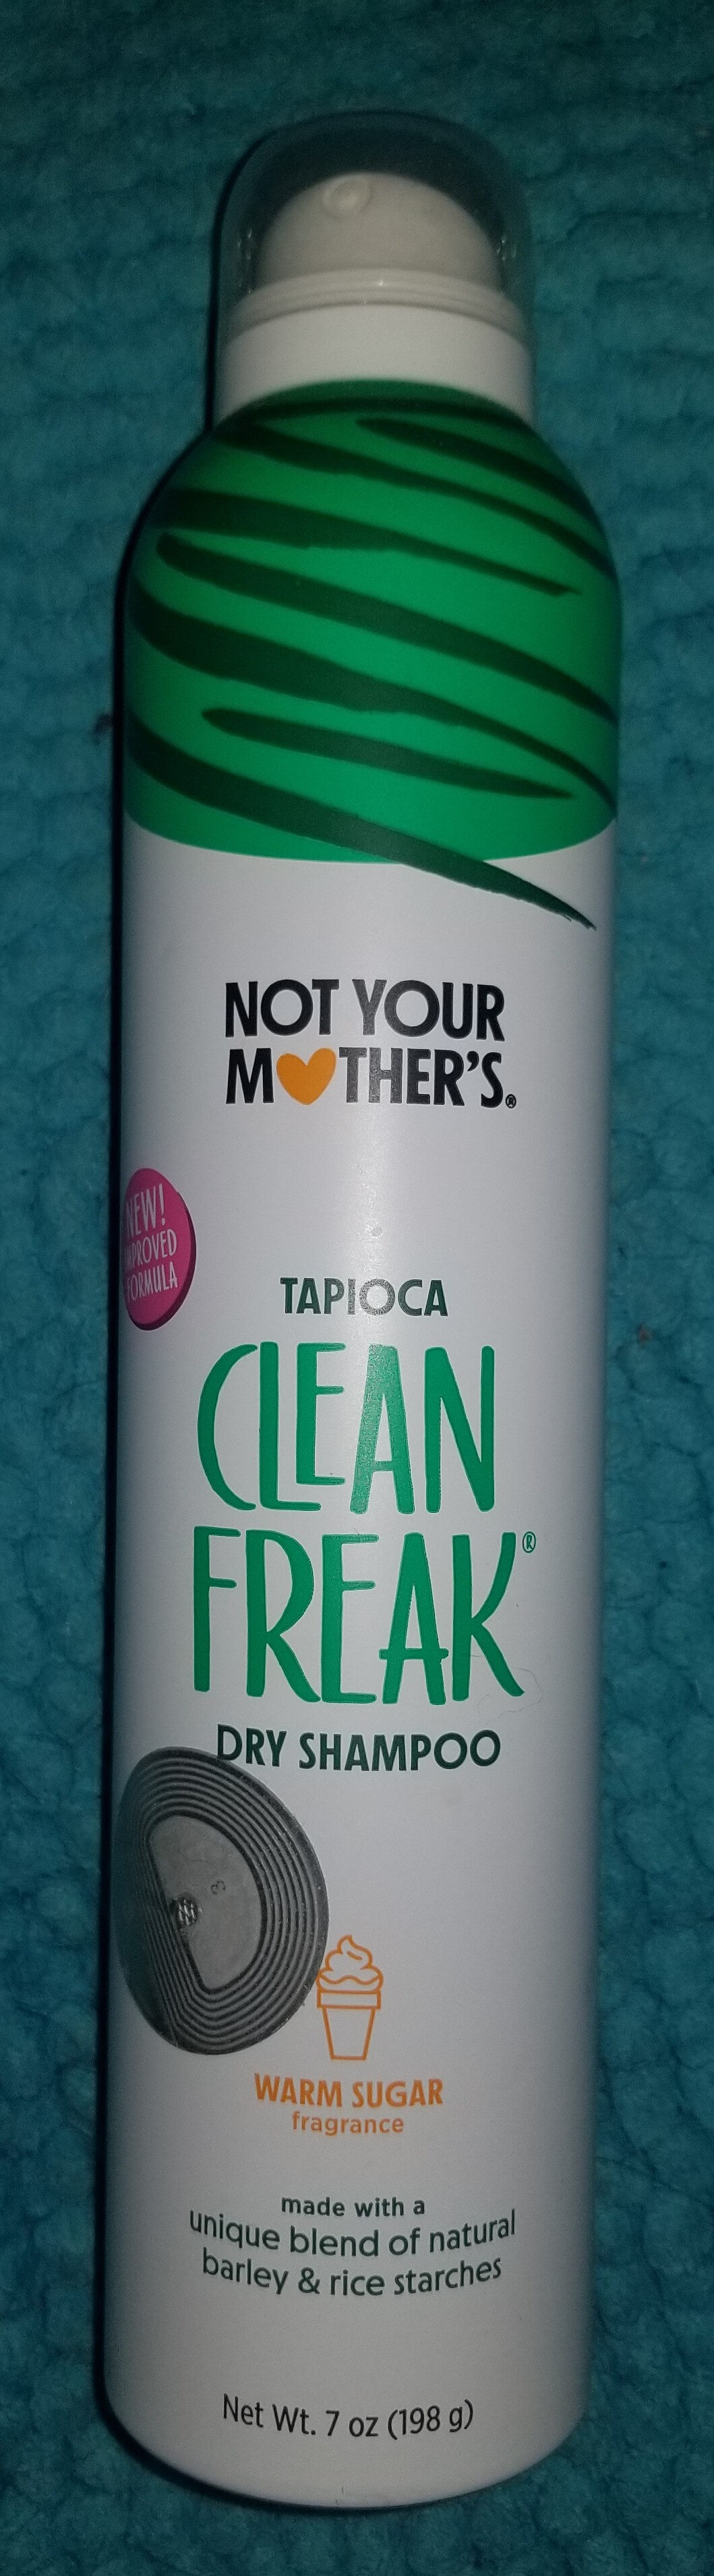 Clean Freak Tapioca Dry Shampoo - Tuote - en